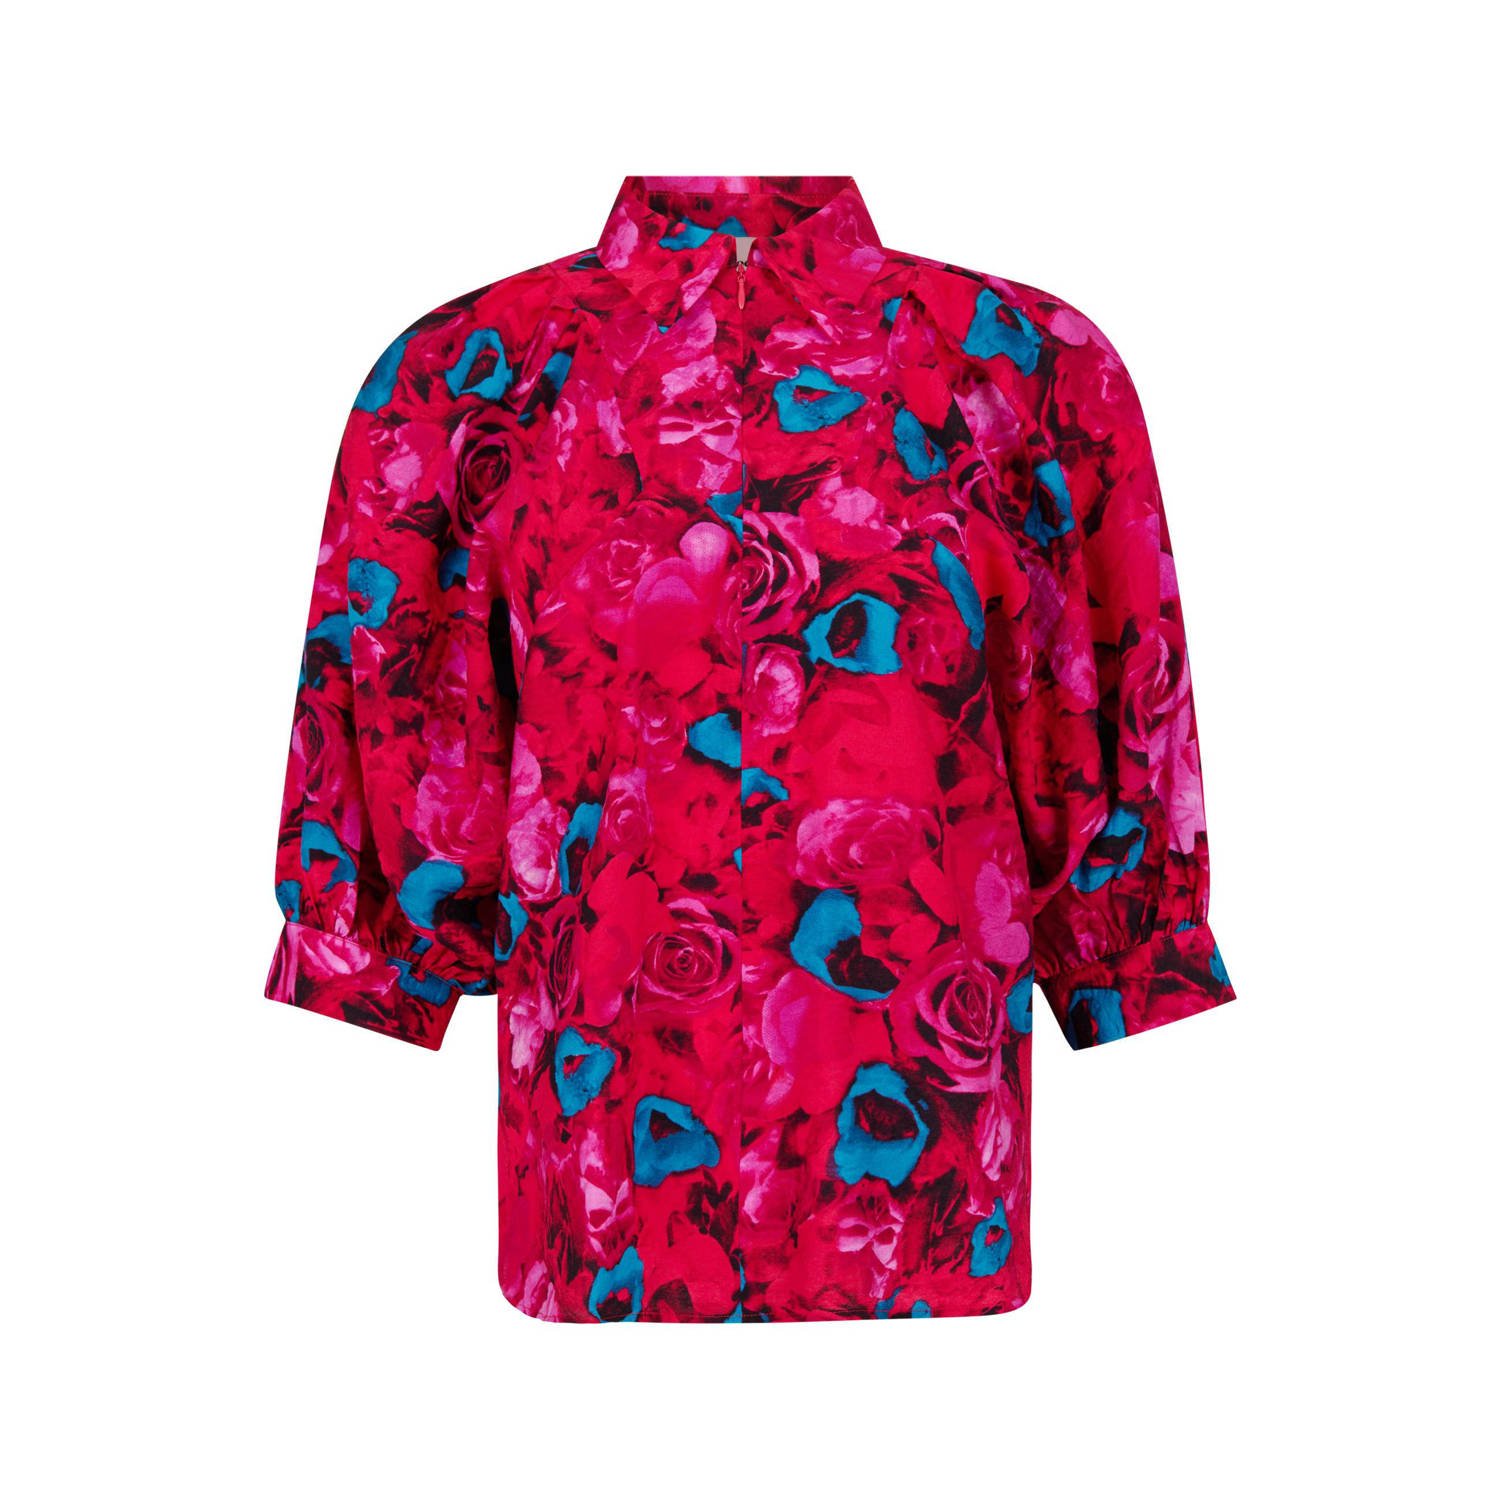 Shoeby gebloemde blouse rood roze